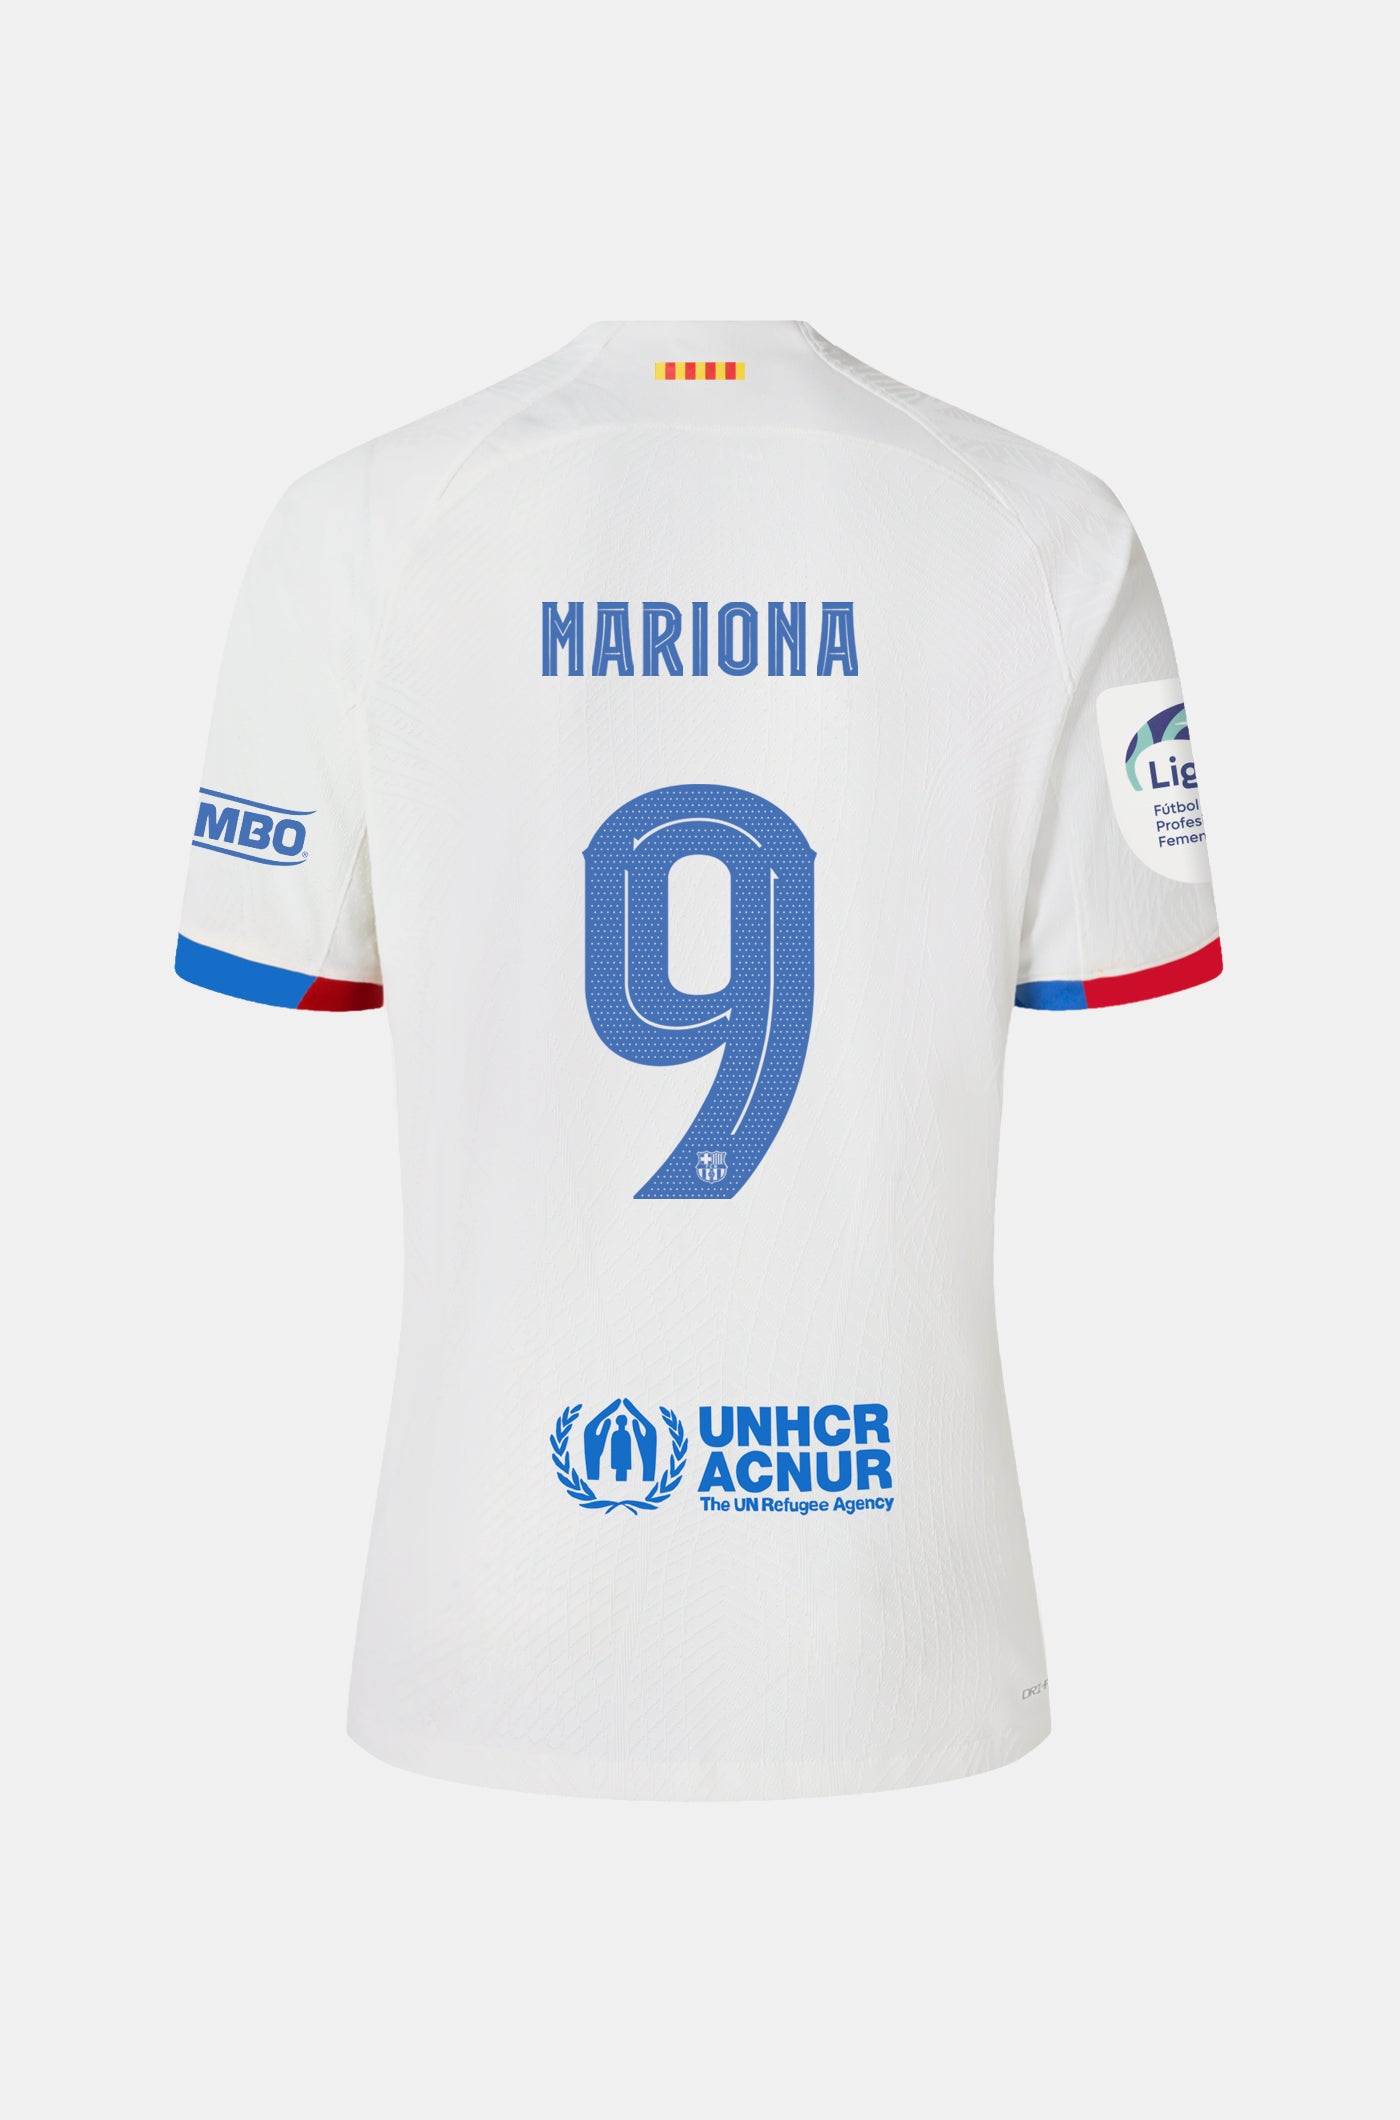 Liga F FC Barcelona Away Shirt 23/24 Player’s Edition - Women  - MARIONA